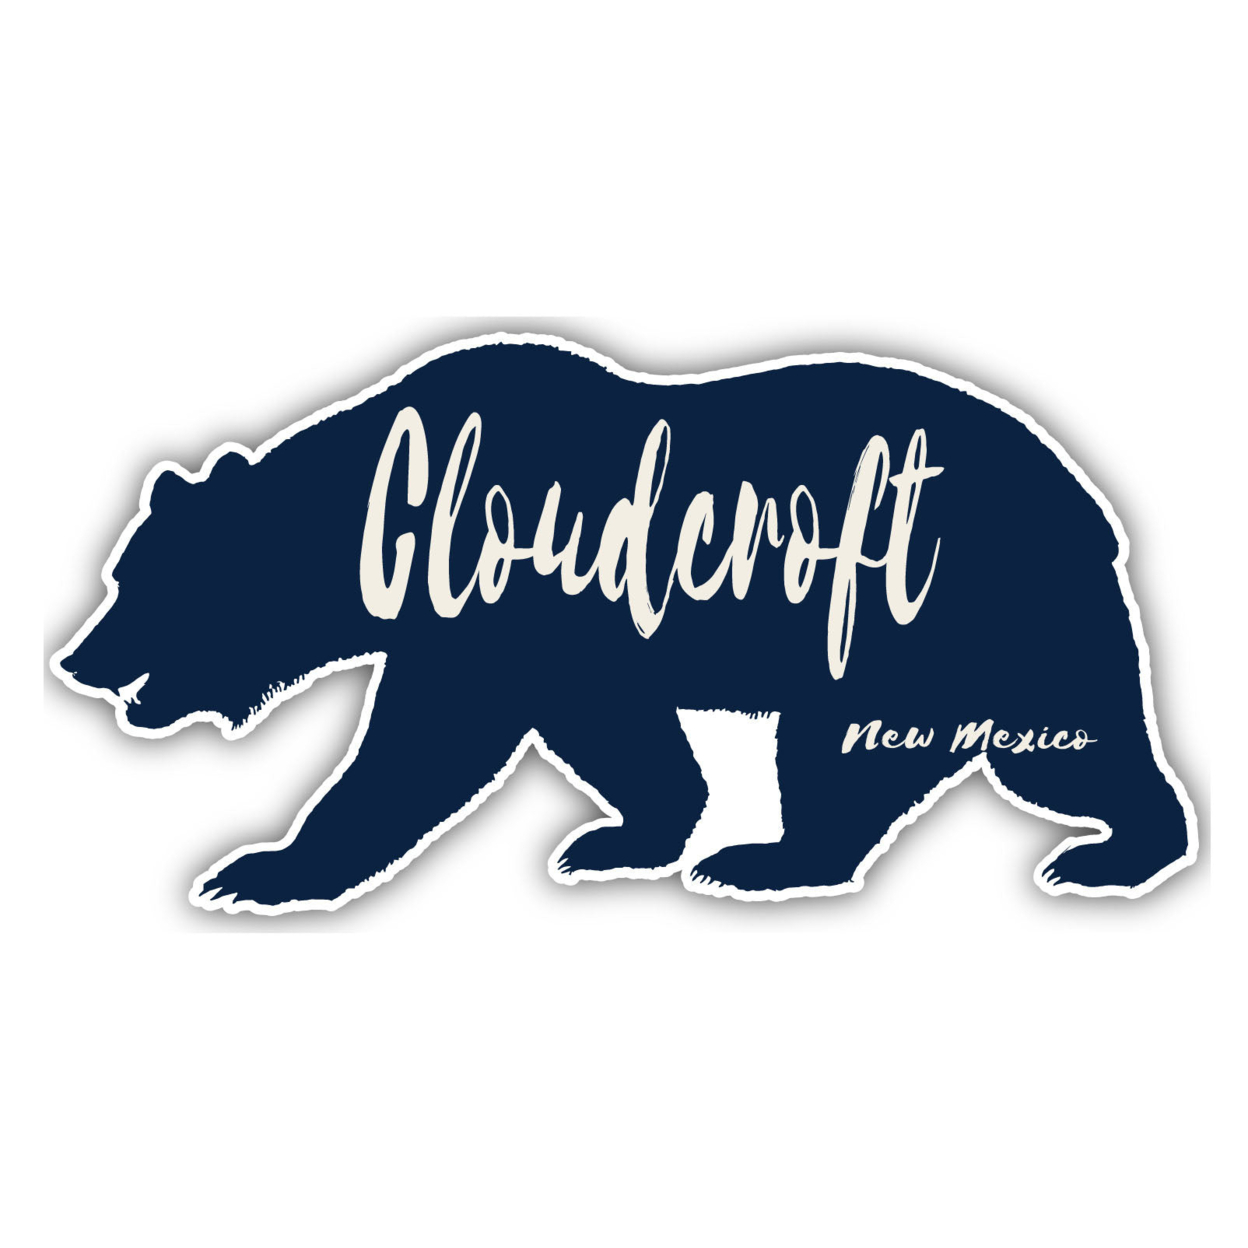 Cloudcroft New Mexico Souvenir Decorative Stickers (Choose Theme And Size) - 4-Pack, 4-Inch, Tent